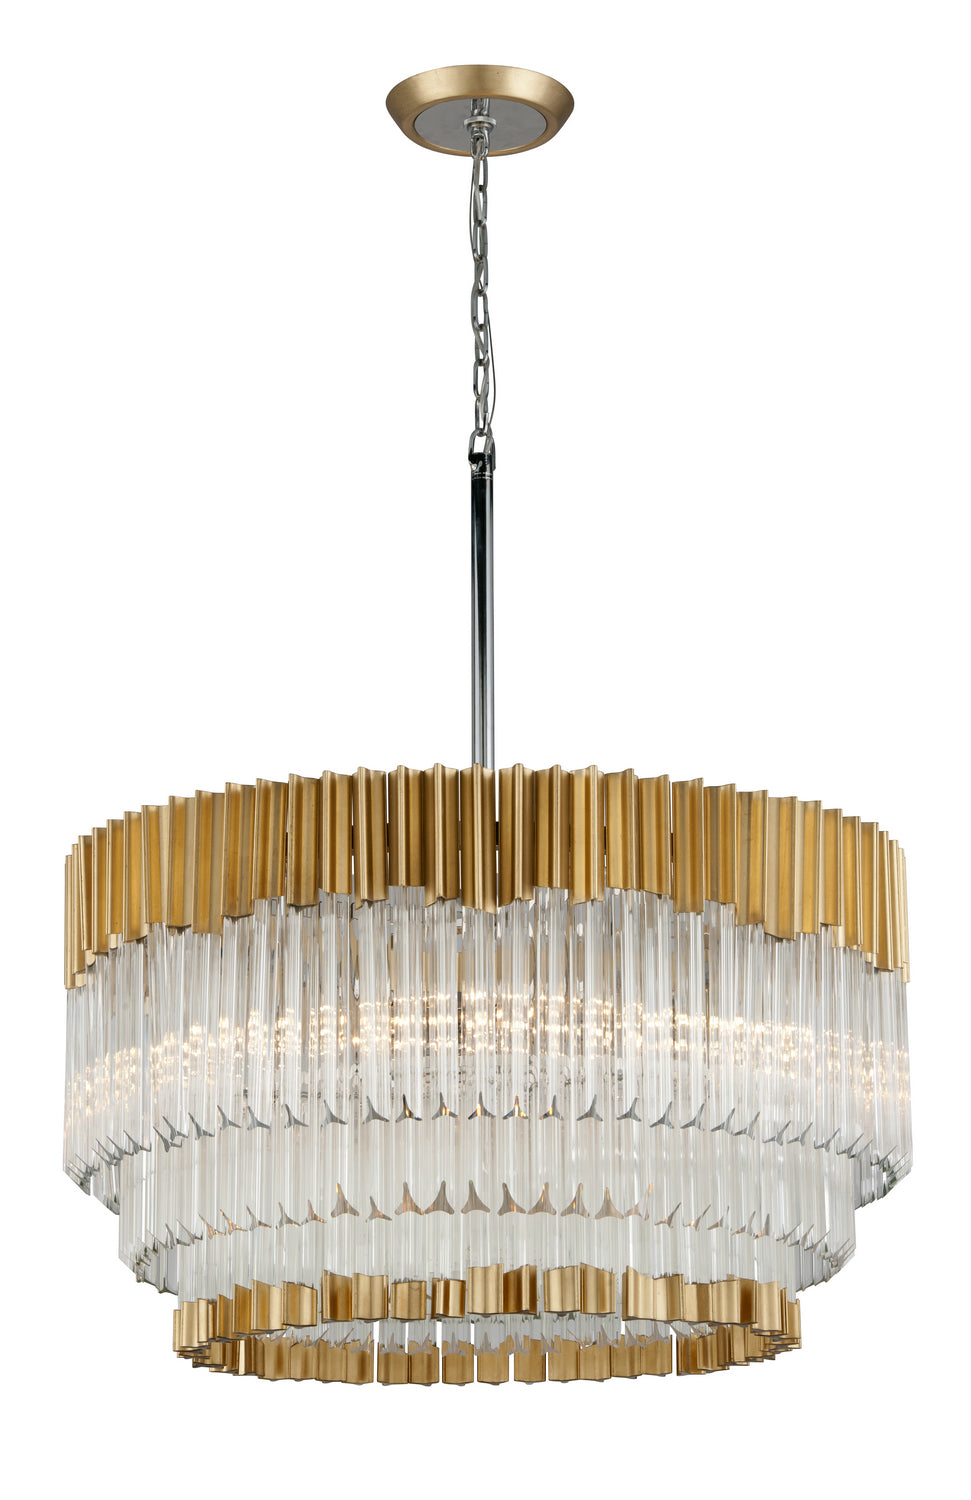 Corbett Lighting - Eight Light Chandelier - Charisma - Gold Leaf W Polished Stainless- Union Lighting Luminaires Decor